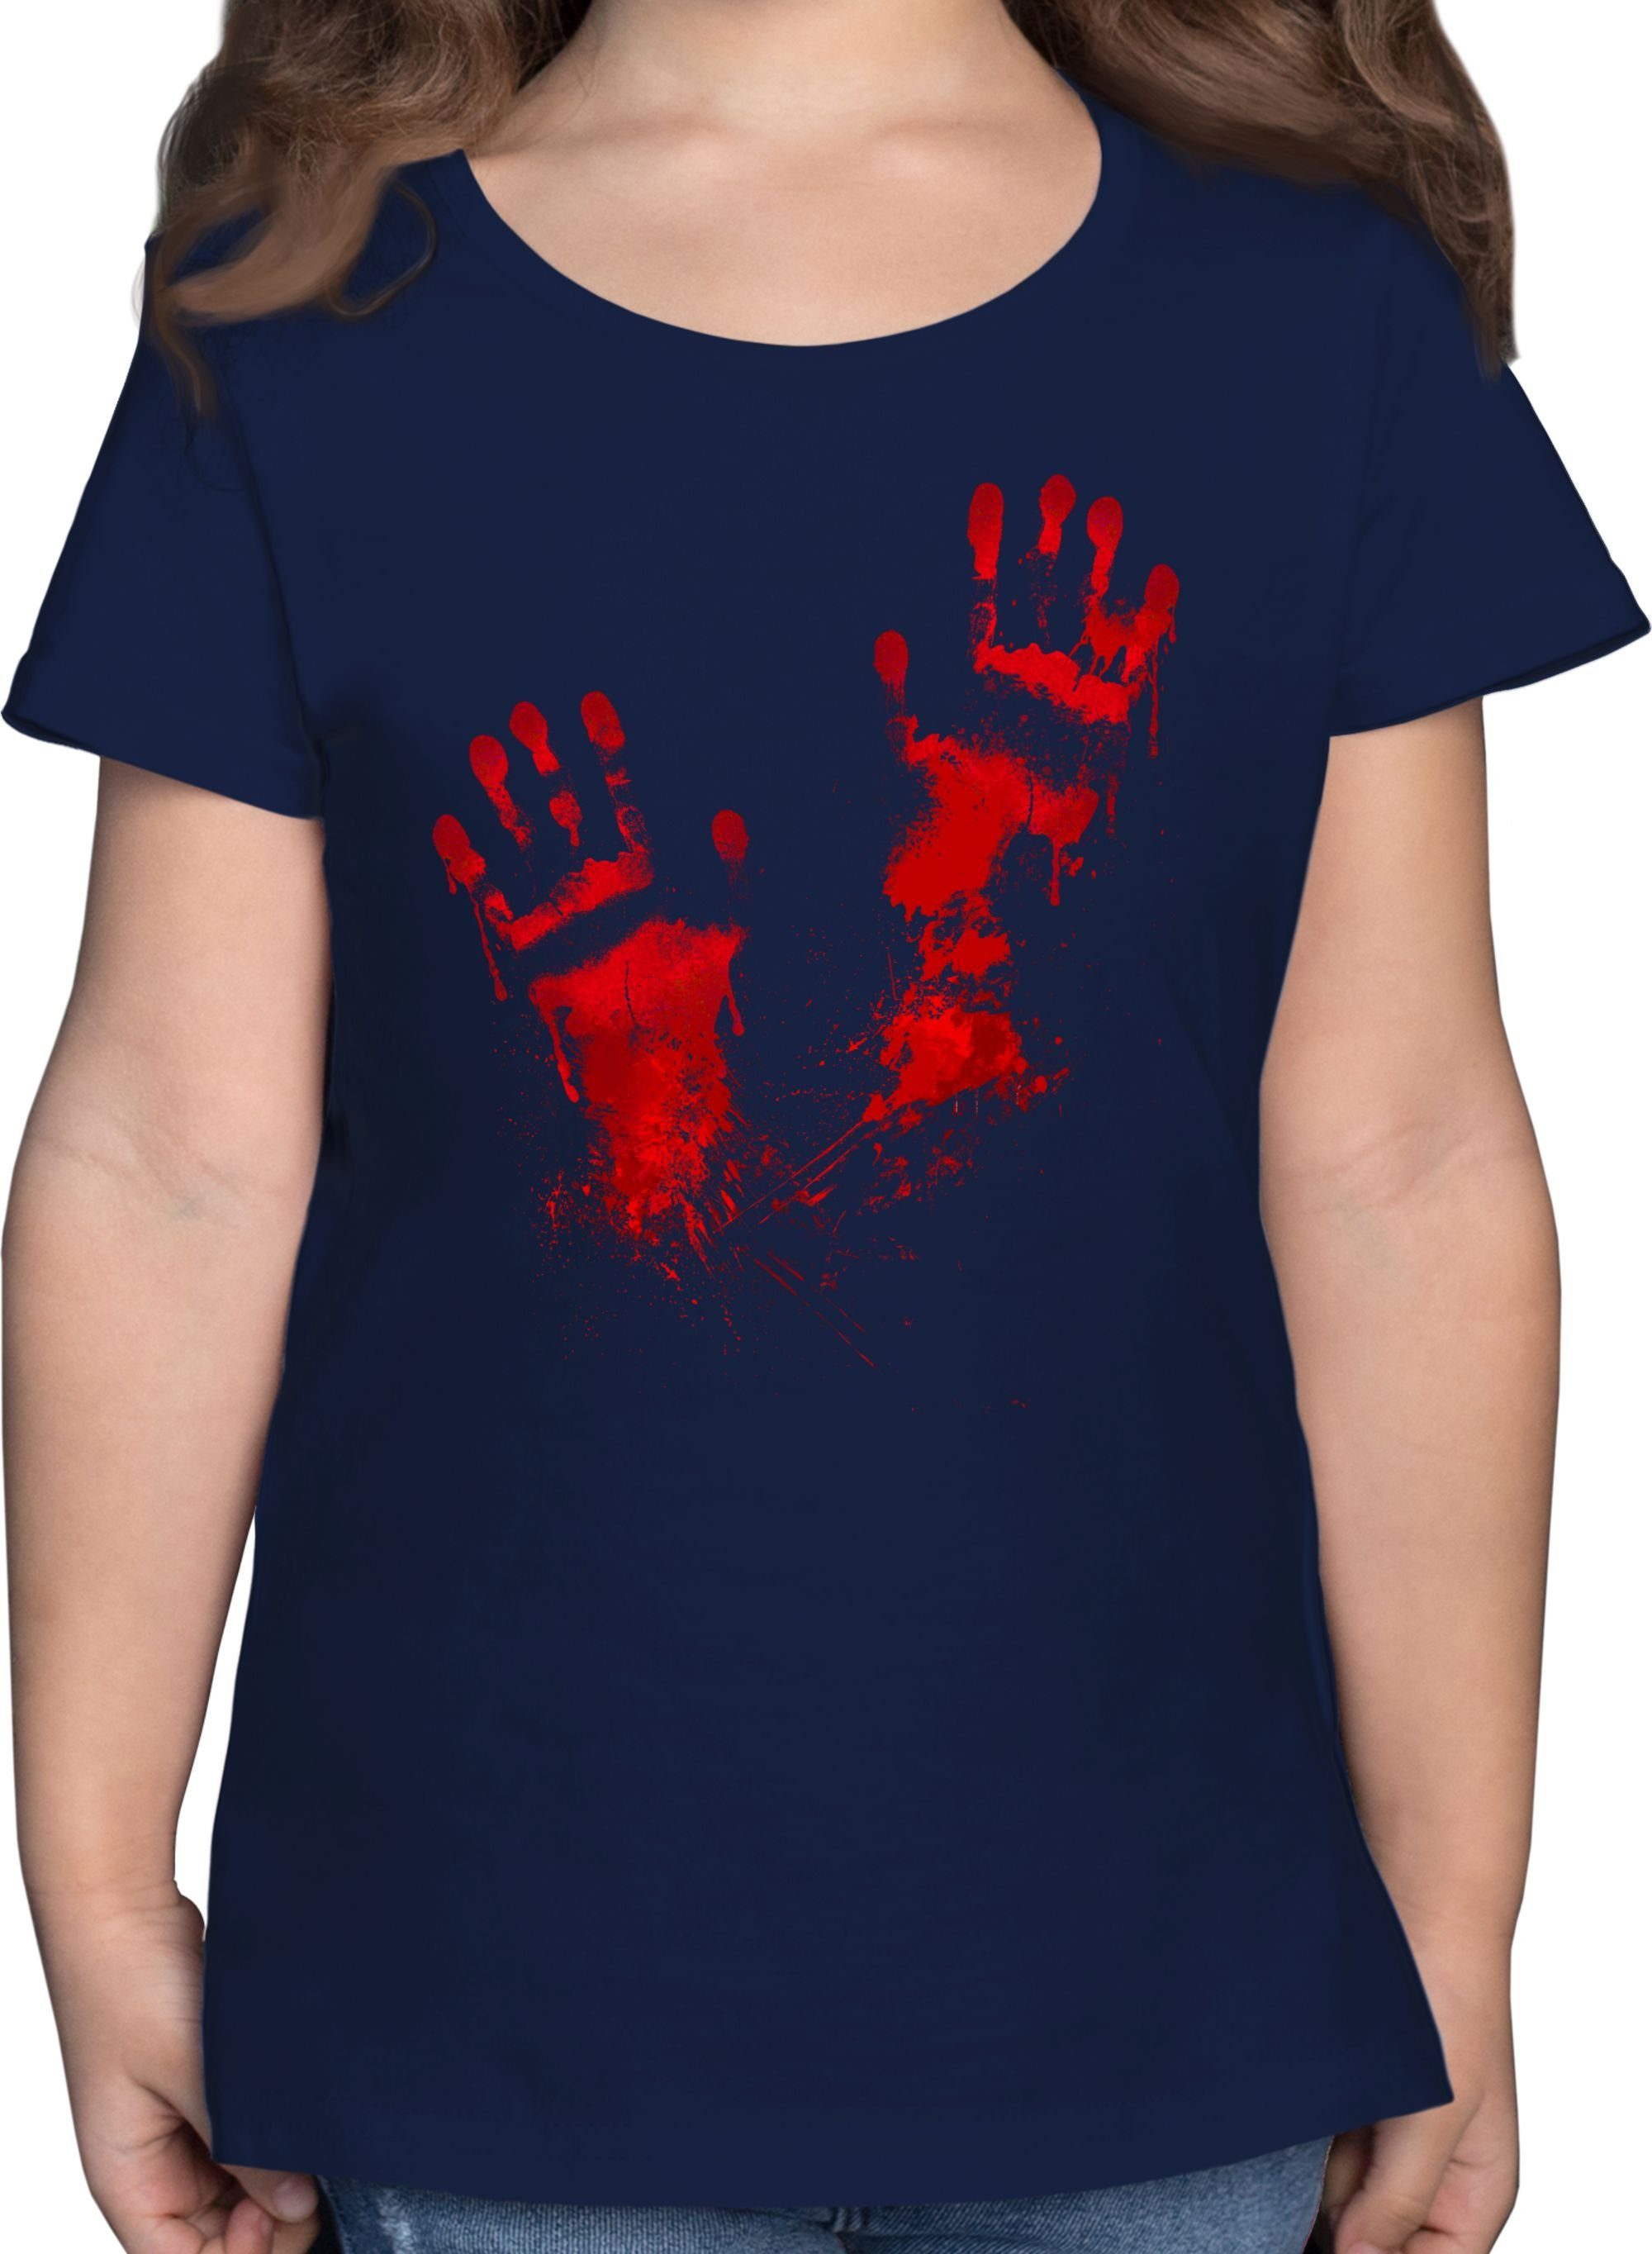 Blutige T-Shirt Kostüme Handabdruck Dunkelblau Kinder Gruselig für Handabdrücke Blut Halloween 3 Shirtracer